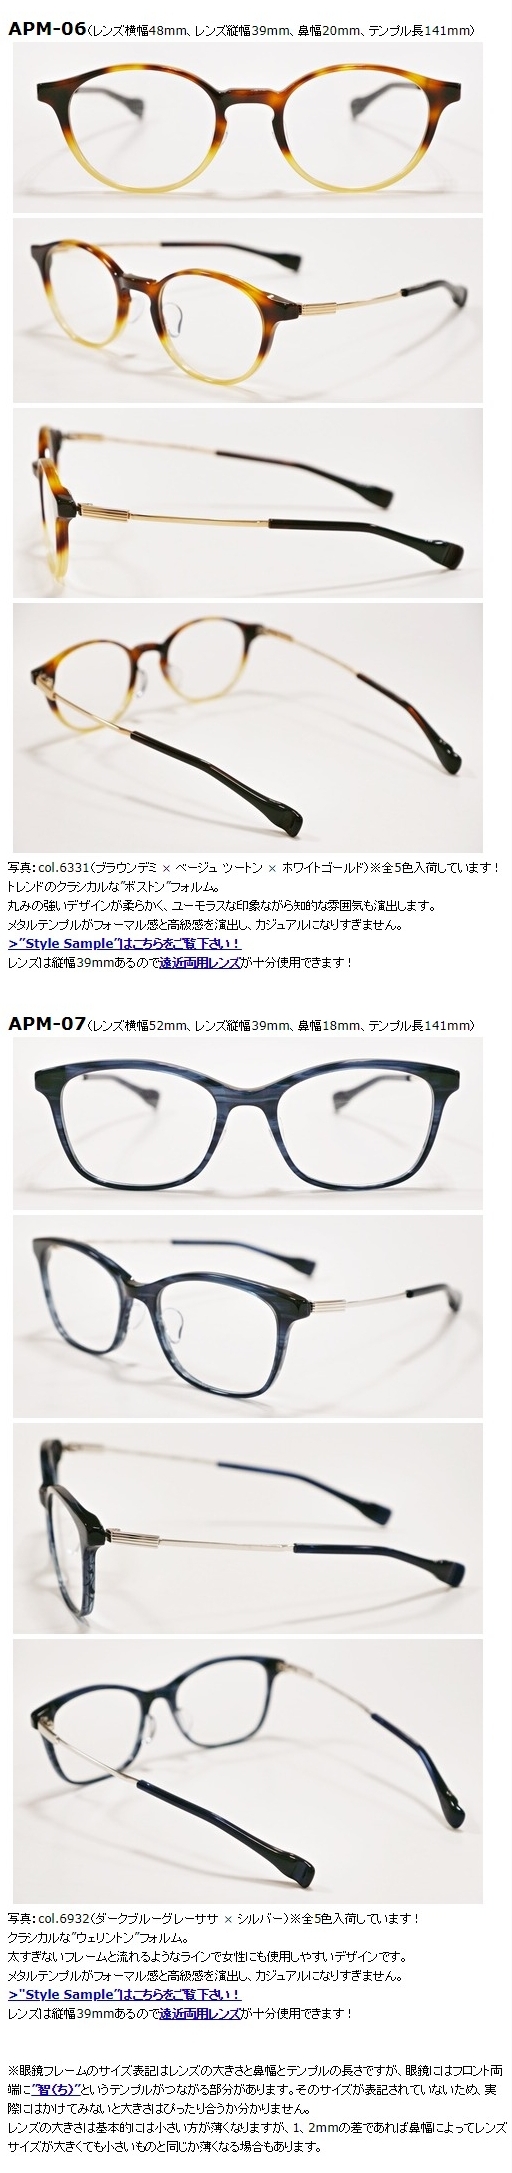 999.9”APM-04シリーズ”】 | 999.9 selected by HAYASHI-MEGANE BLOG(2)